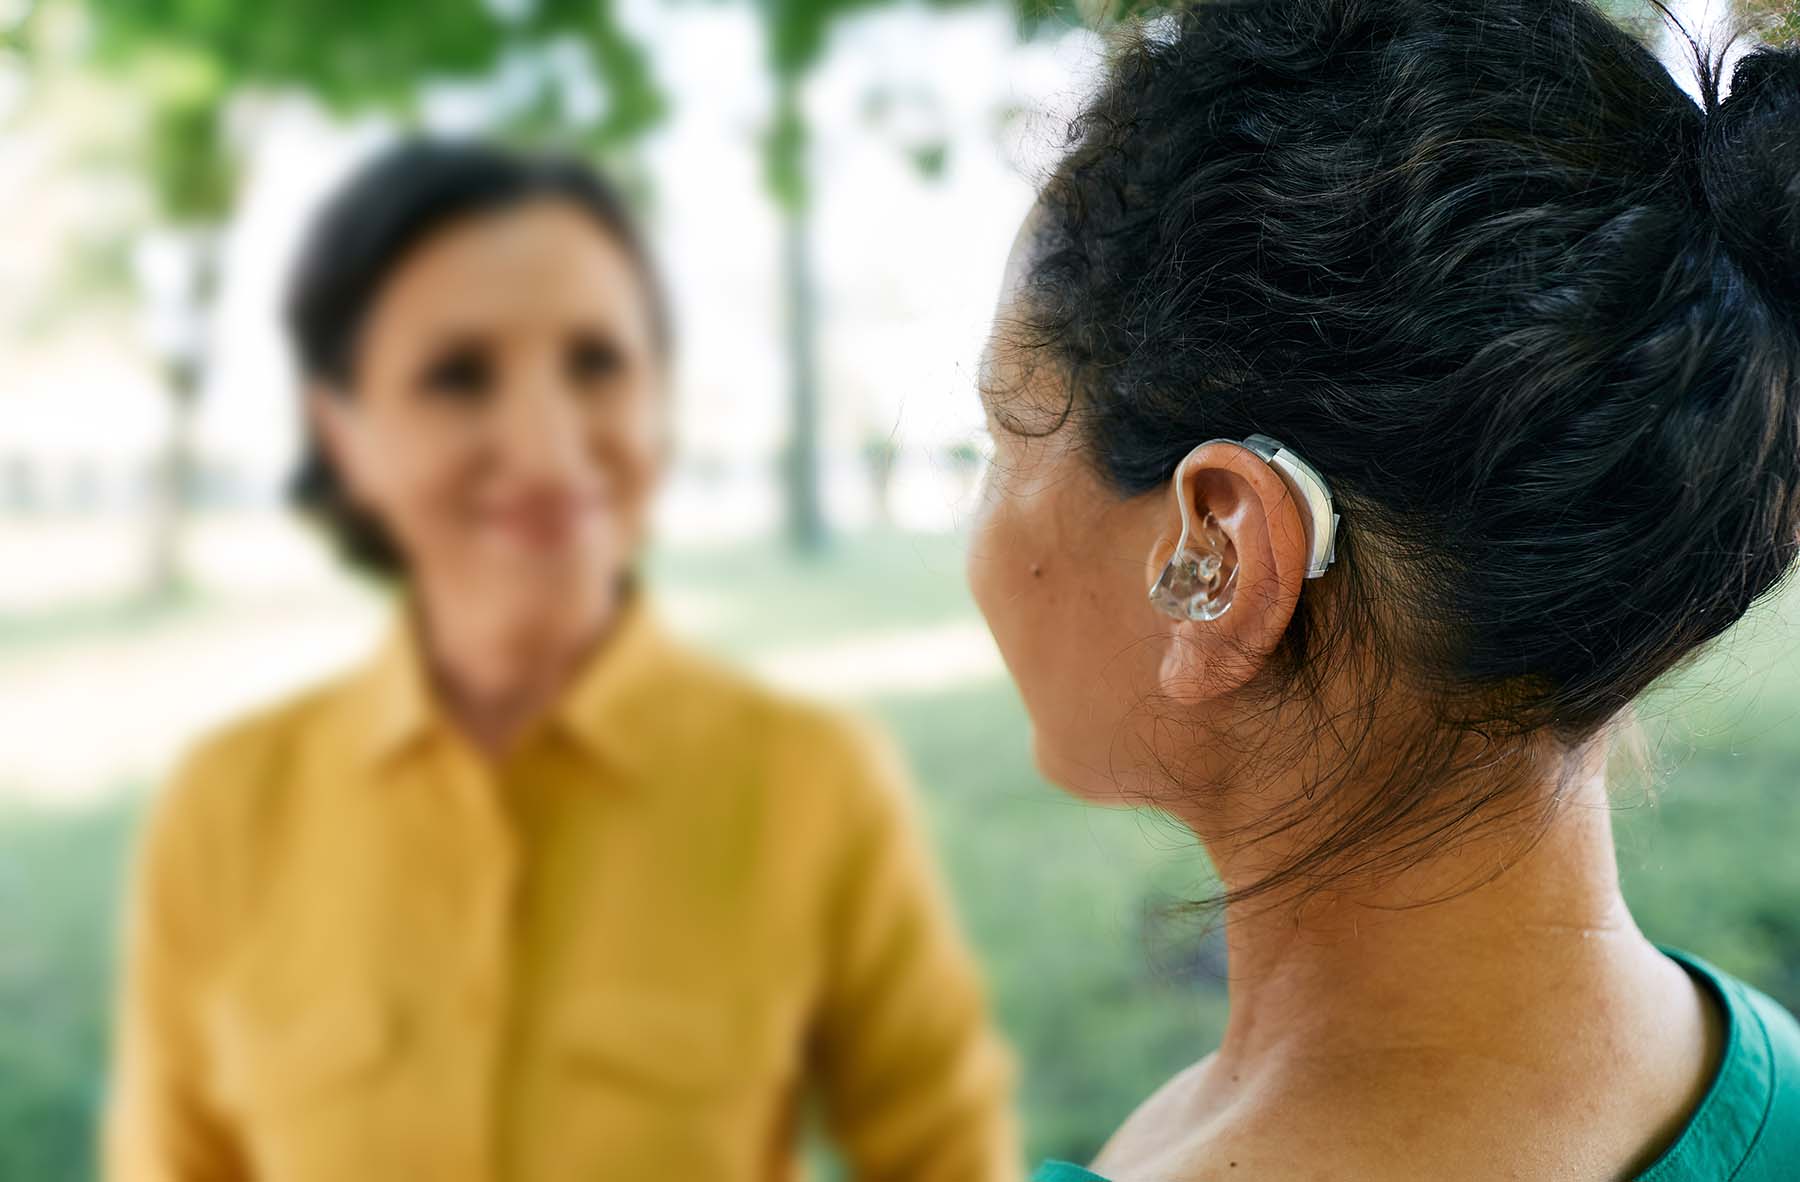 Two Hispanic women speaking outside. One is wearing a hearing aid.